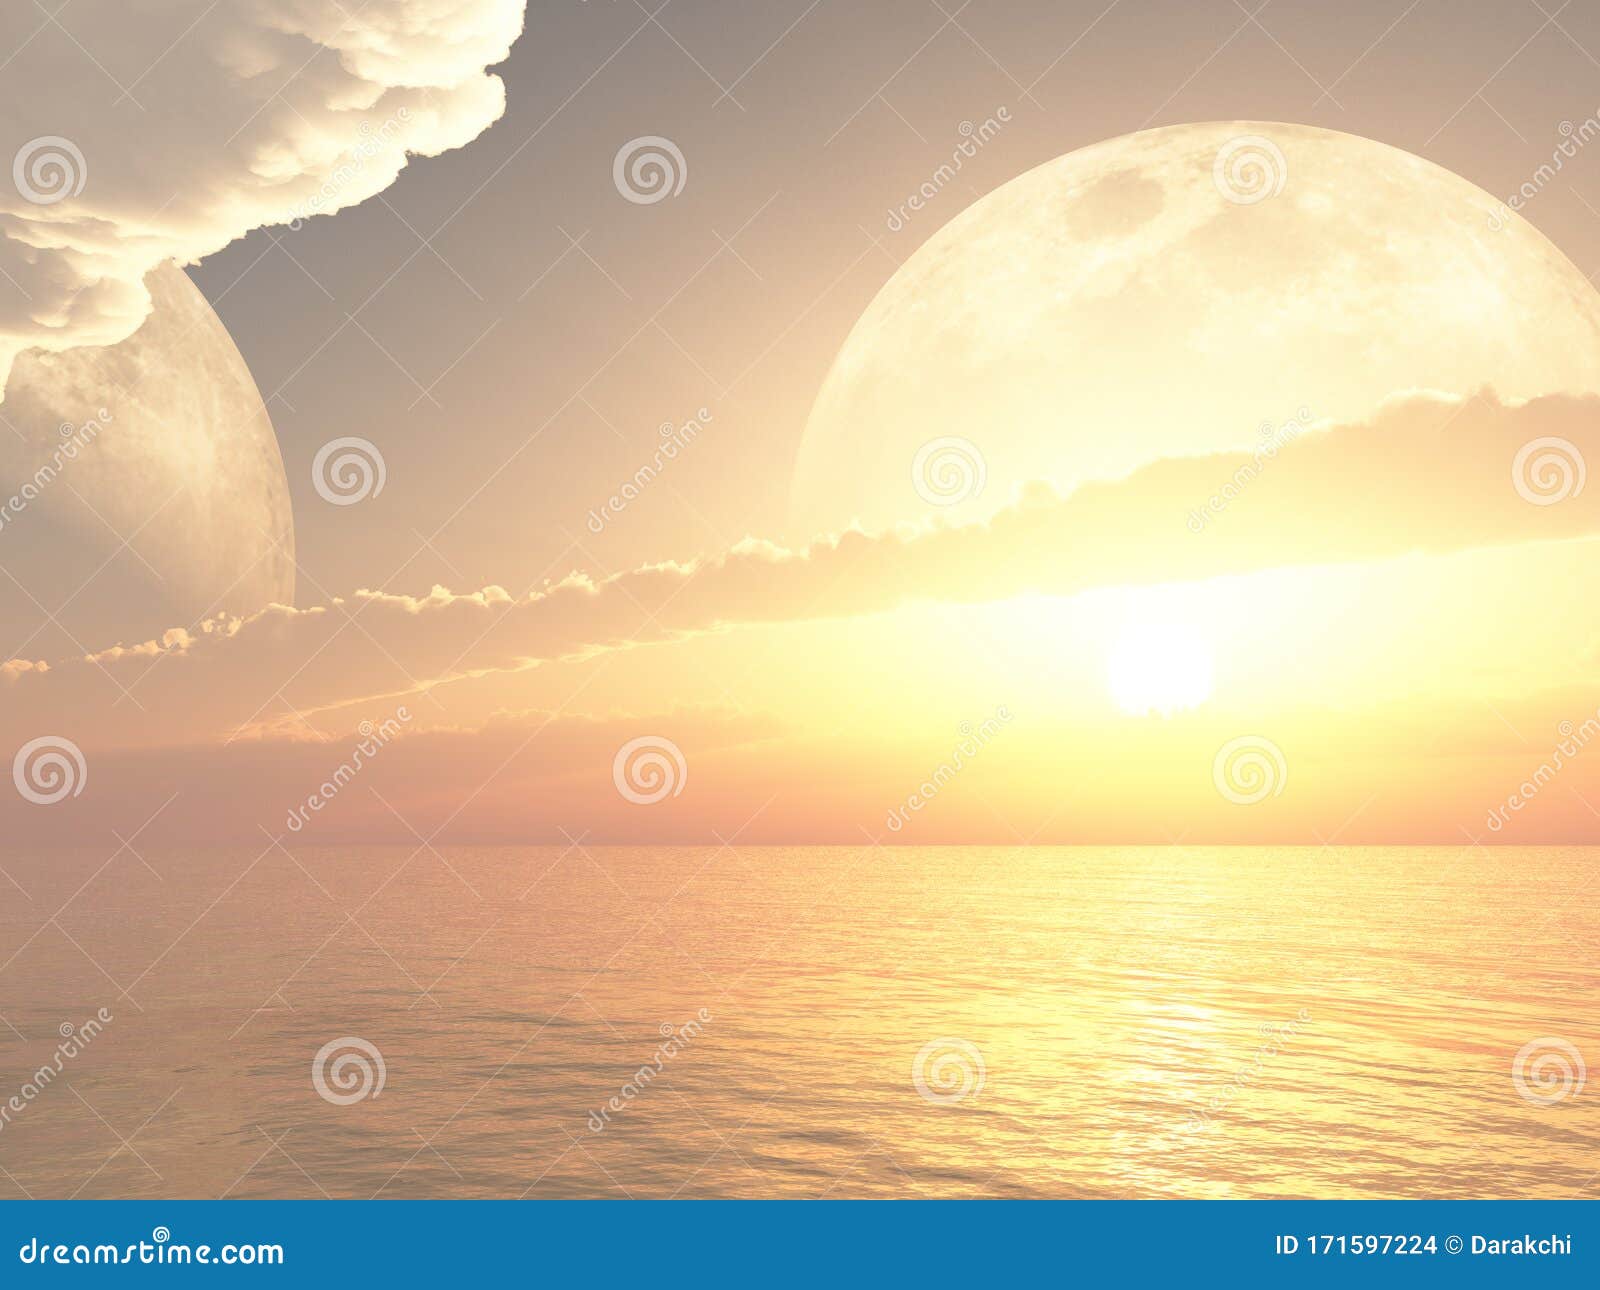 Beautiful Sunrise or Sunset on a Far Away Planet Stock Illustration -  Illustration of horizon, river: 171597224